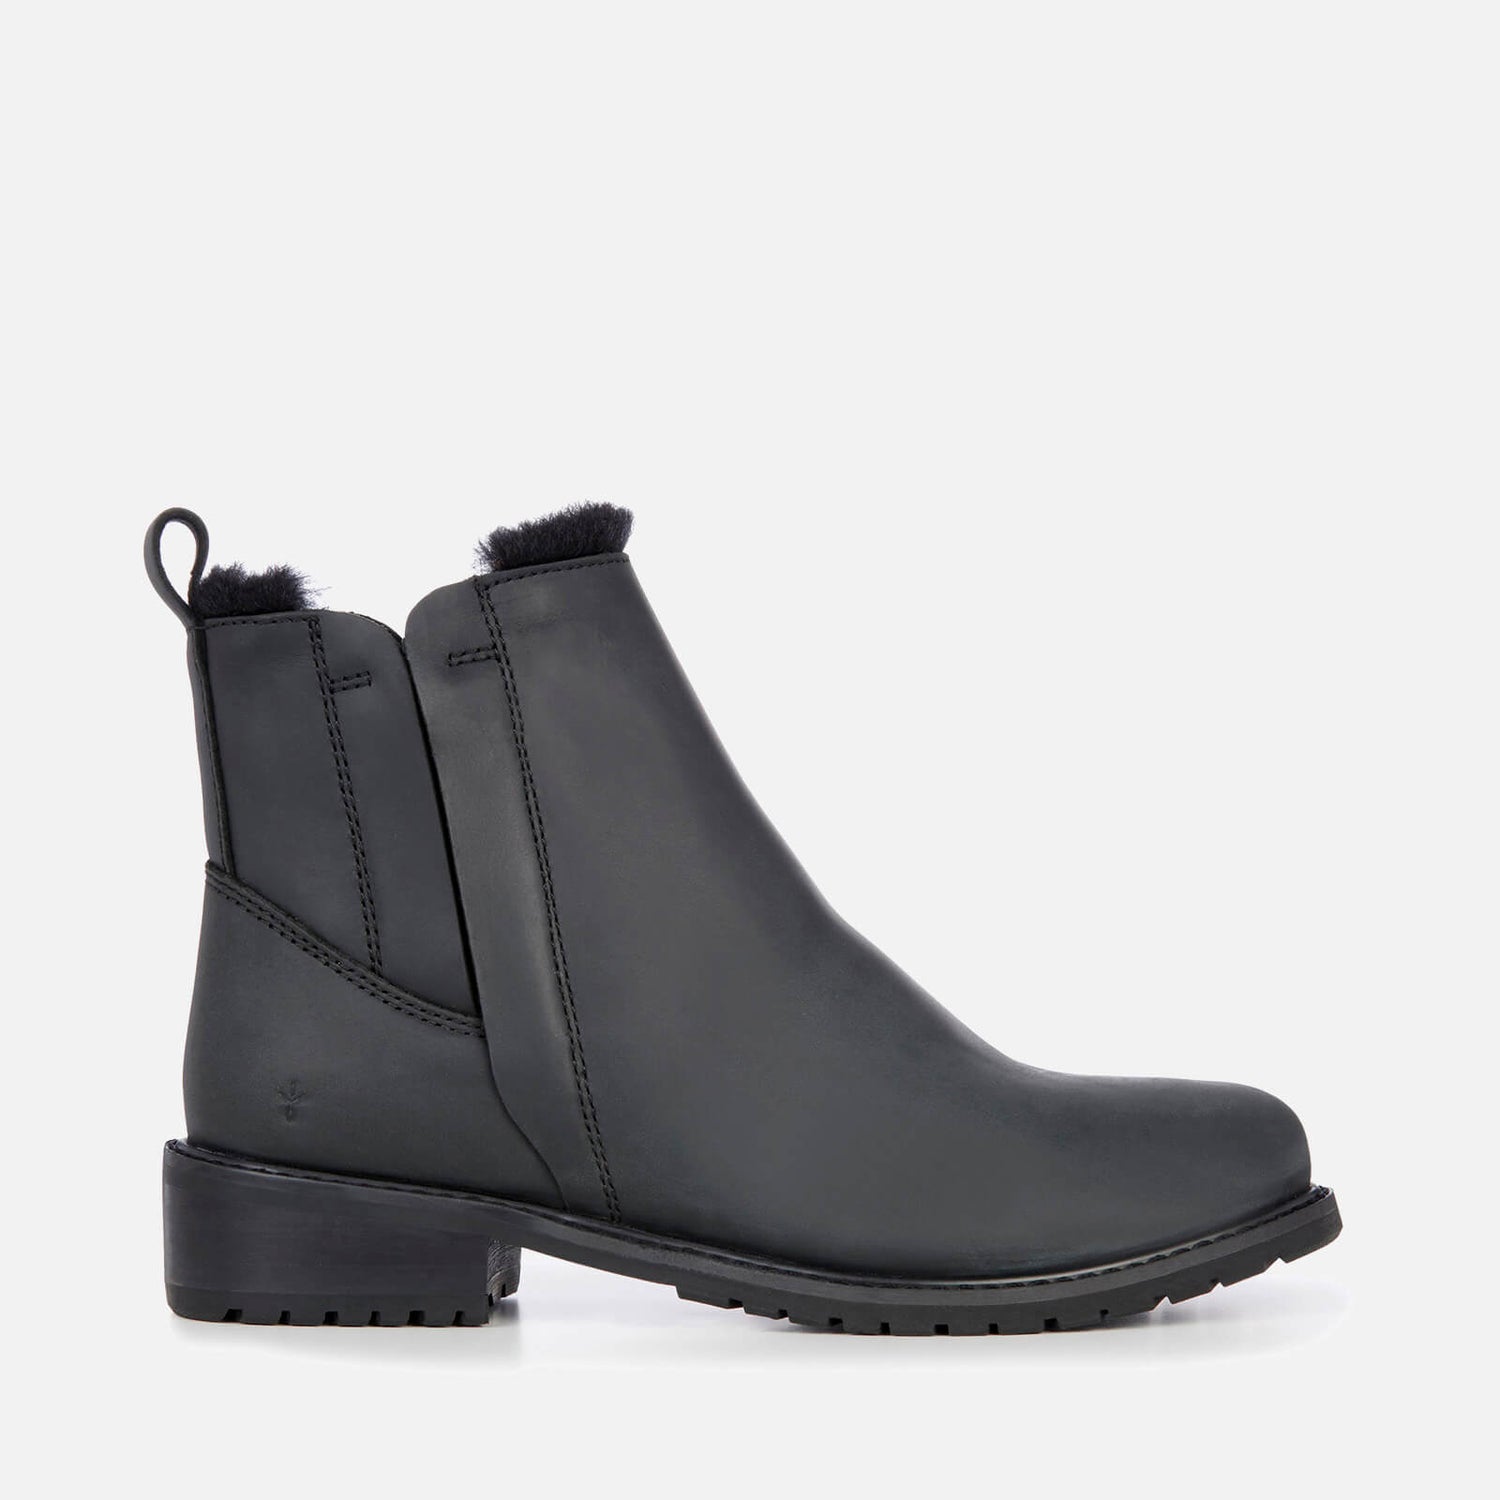 EMU Australia Women's Pioneer Leather Ankle Boots - Black - UK 3